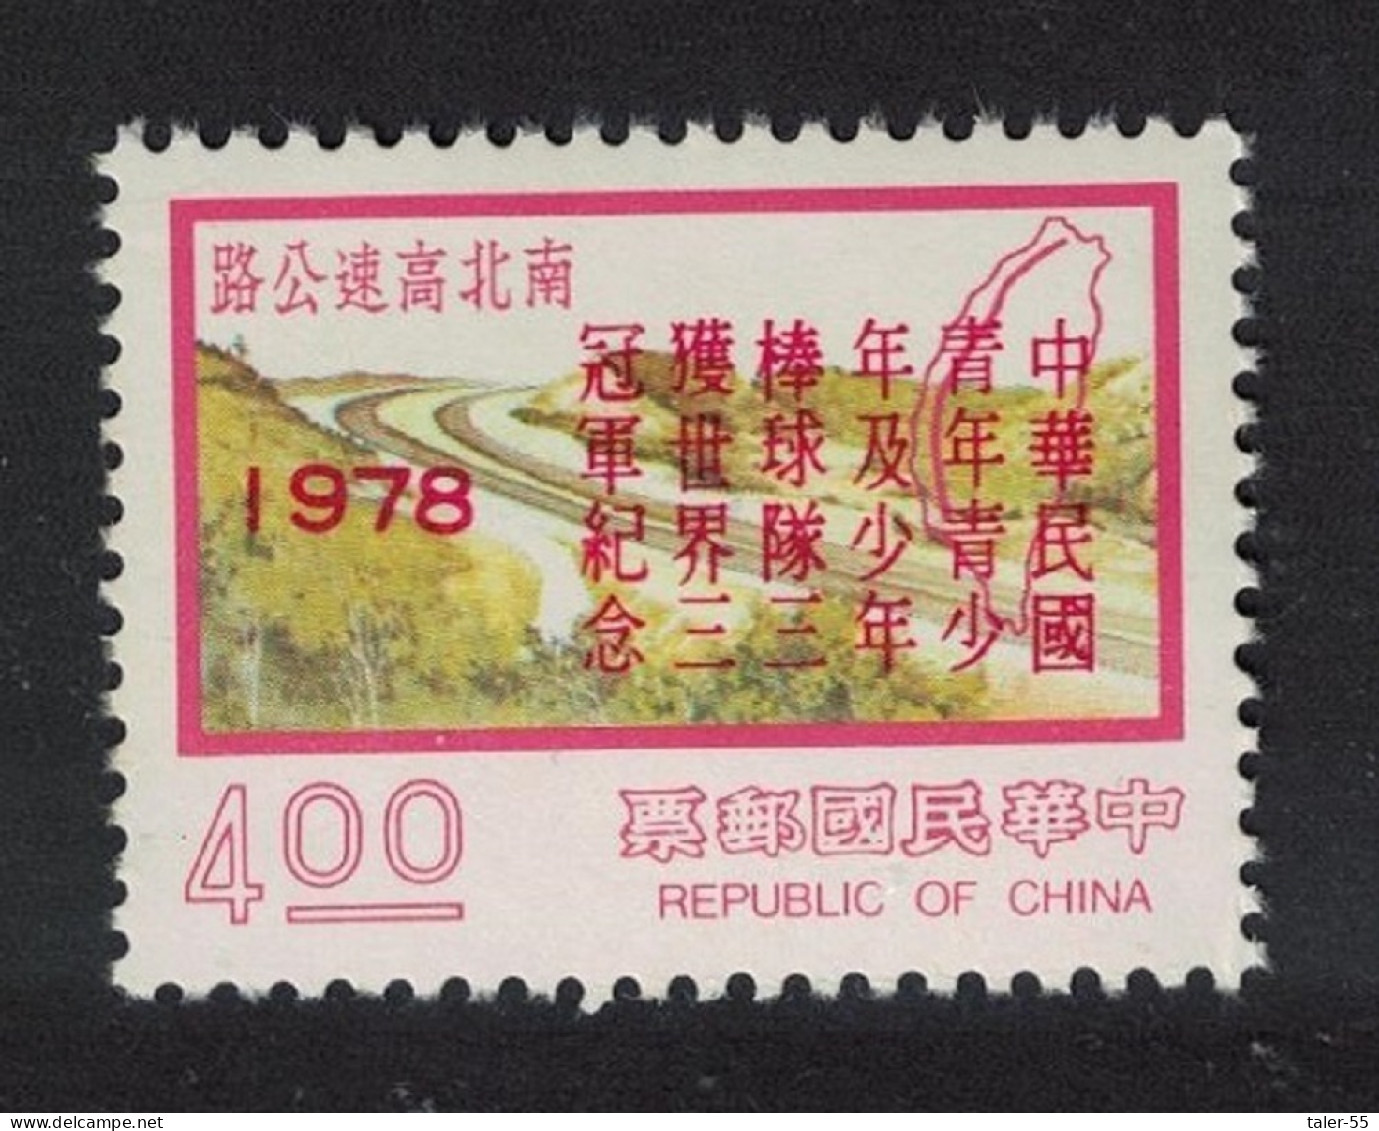 Taiwan World Baseball Series $4 1978 MNH SG#1214 - Unused Stamps